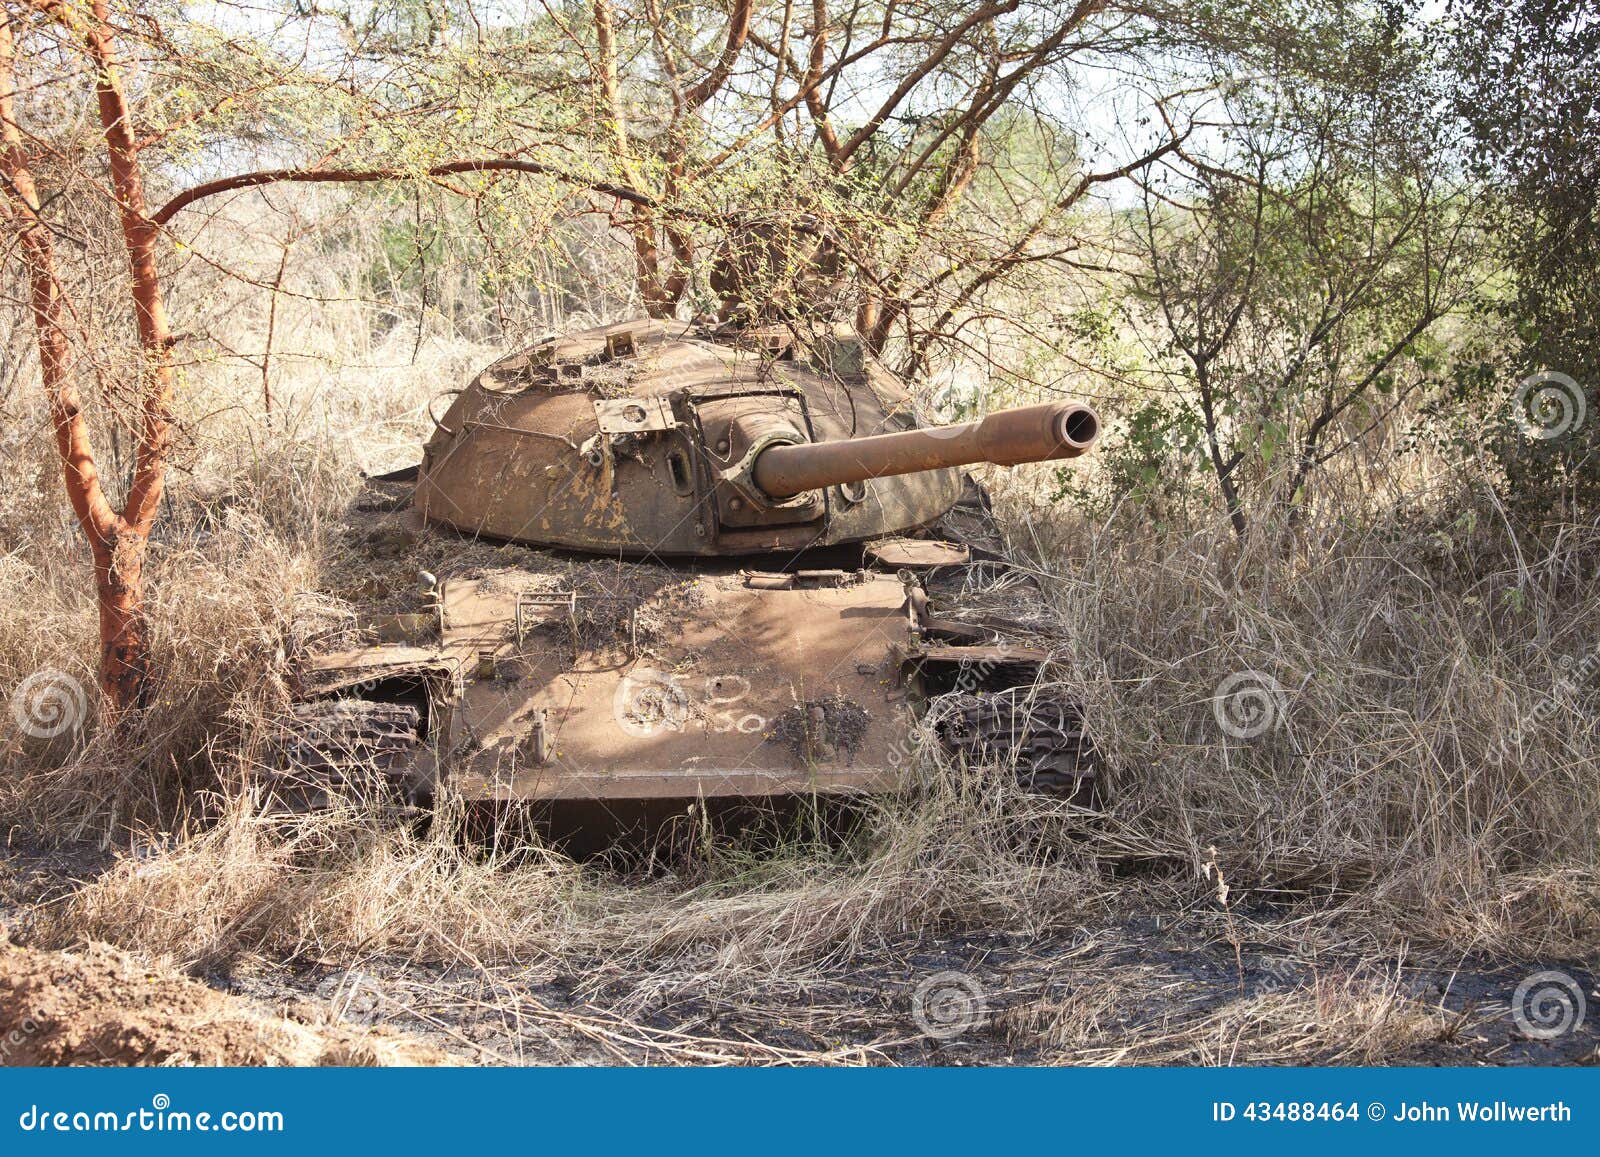 wrecked-tank-south-sudan-northern-sudanese-destroyed-civil-war-43488464.jpg